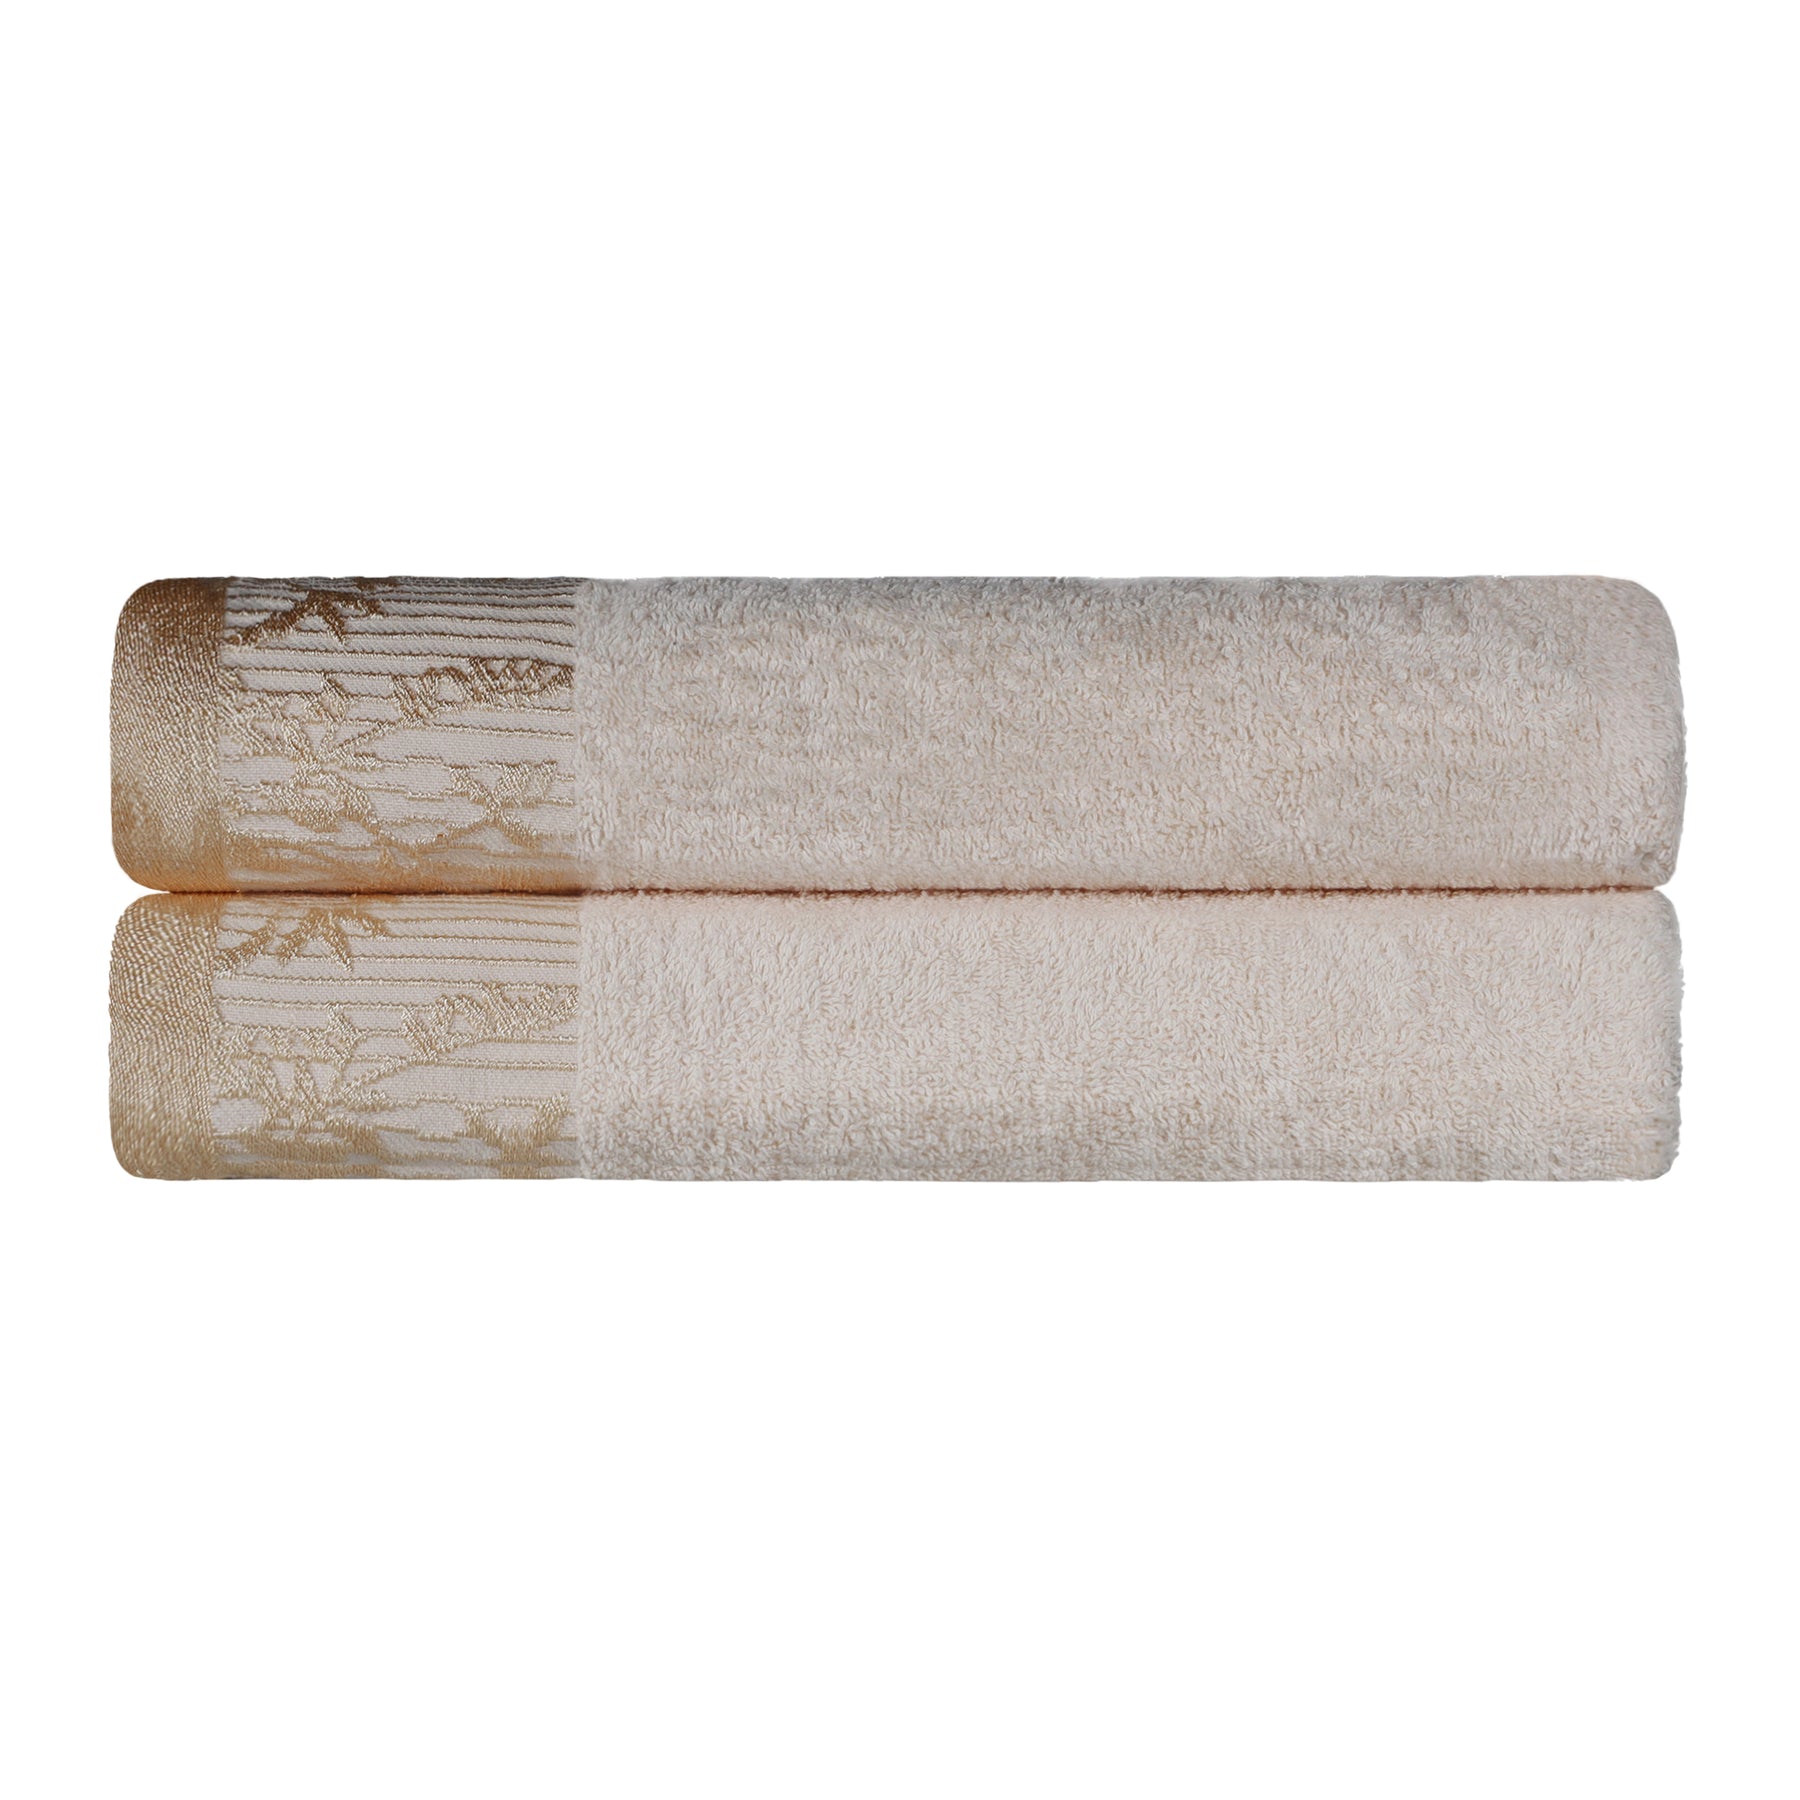 Superior Wisteria Cotton Floral Jacquard Border Bath Towels  - Ivory